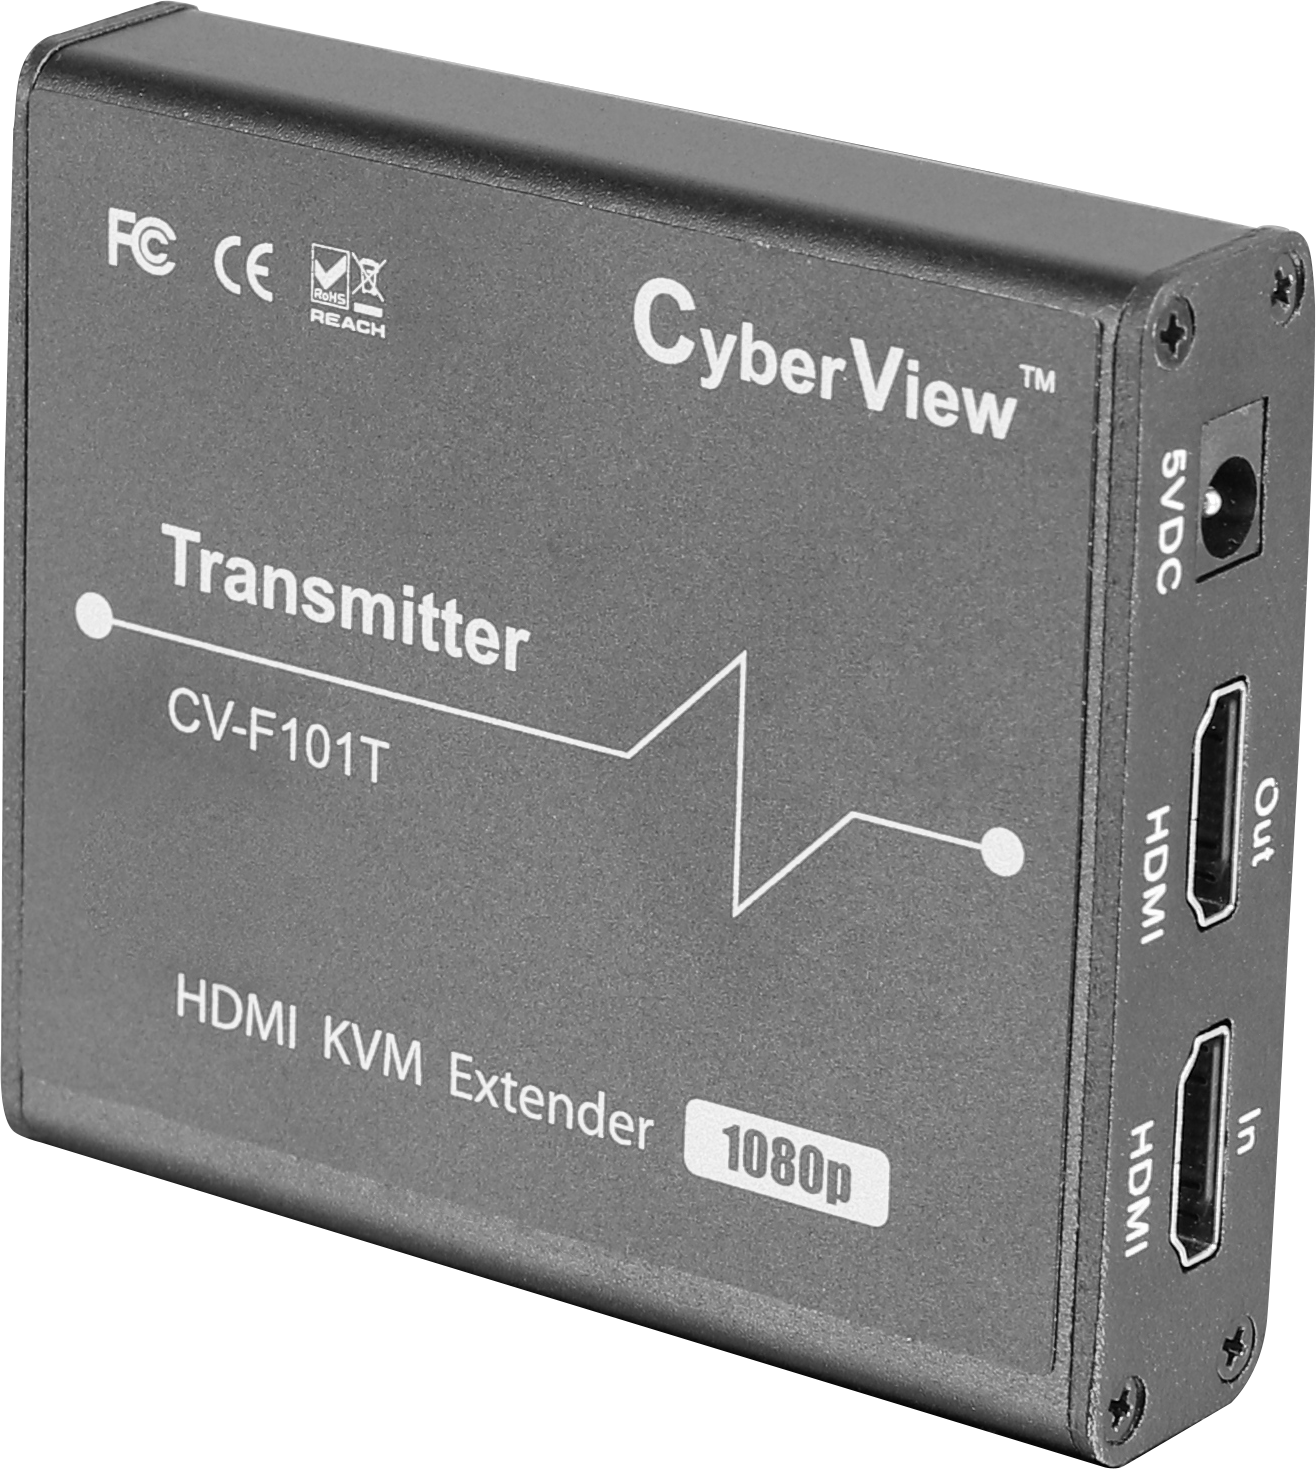 CV-F101T, Cyberview 1080p HDMI KVM Extender (Transmitter)